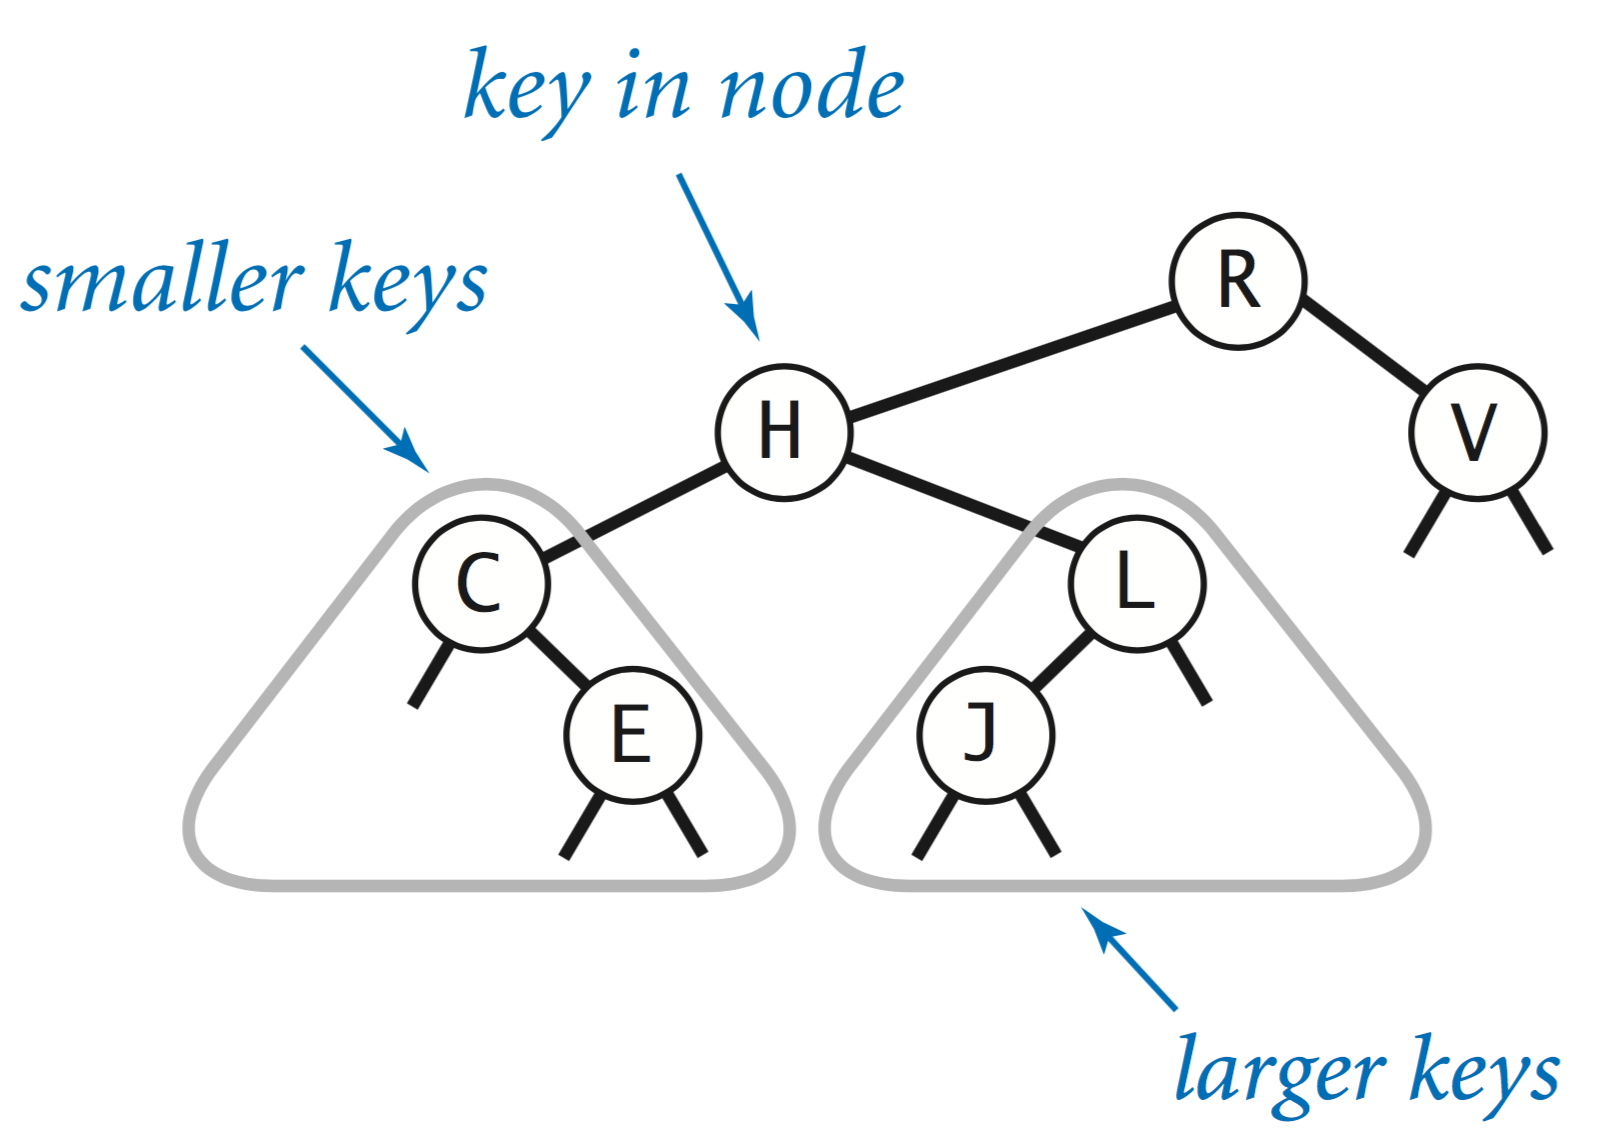 binary search tree